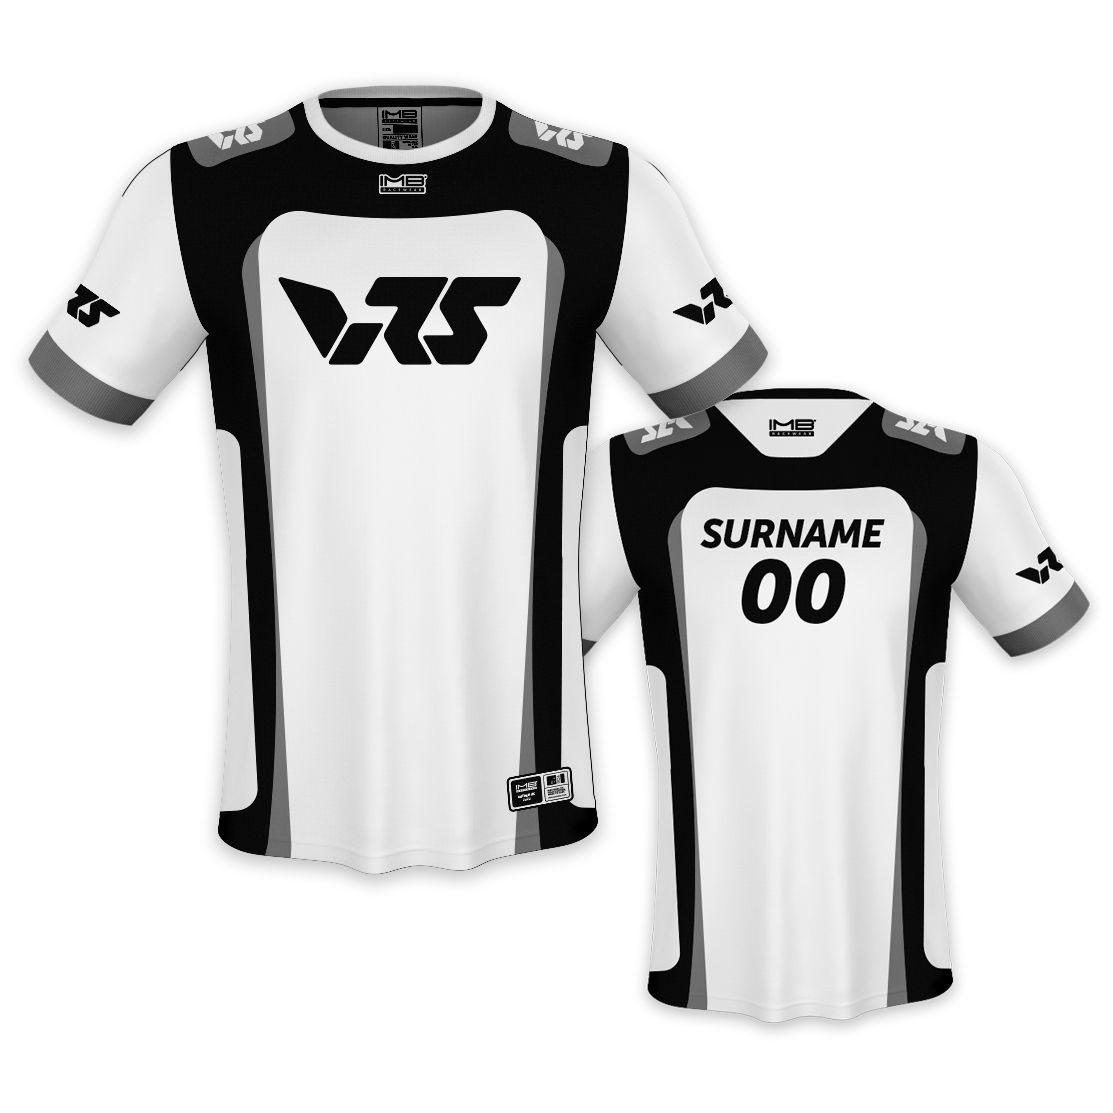 VRS Short Sleeve Jersey - Black